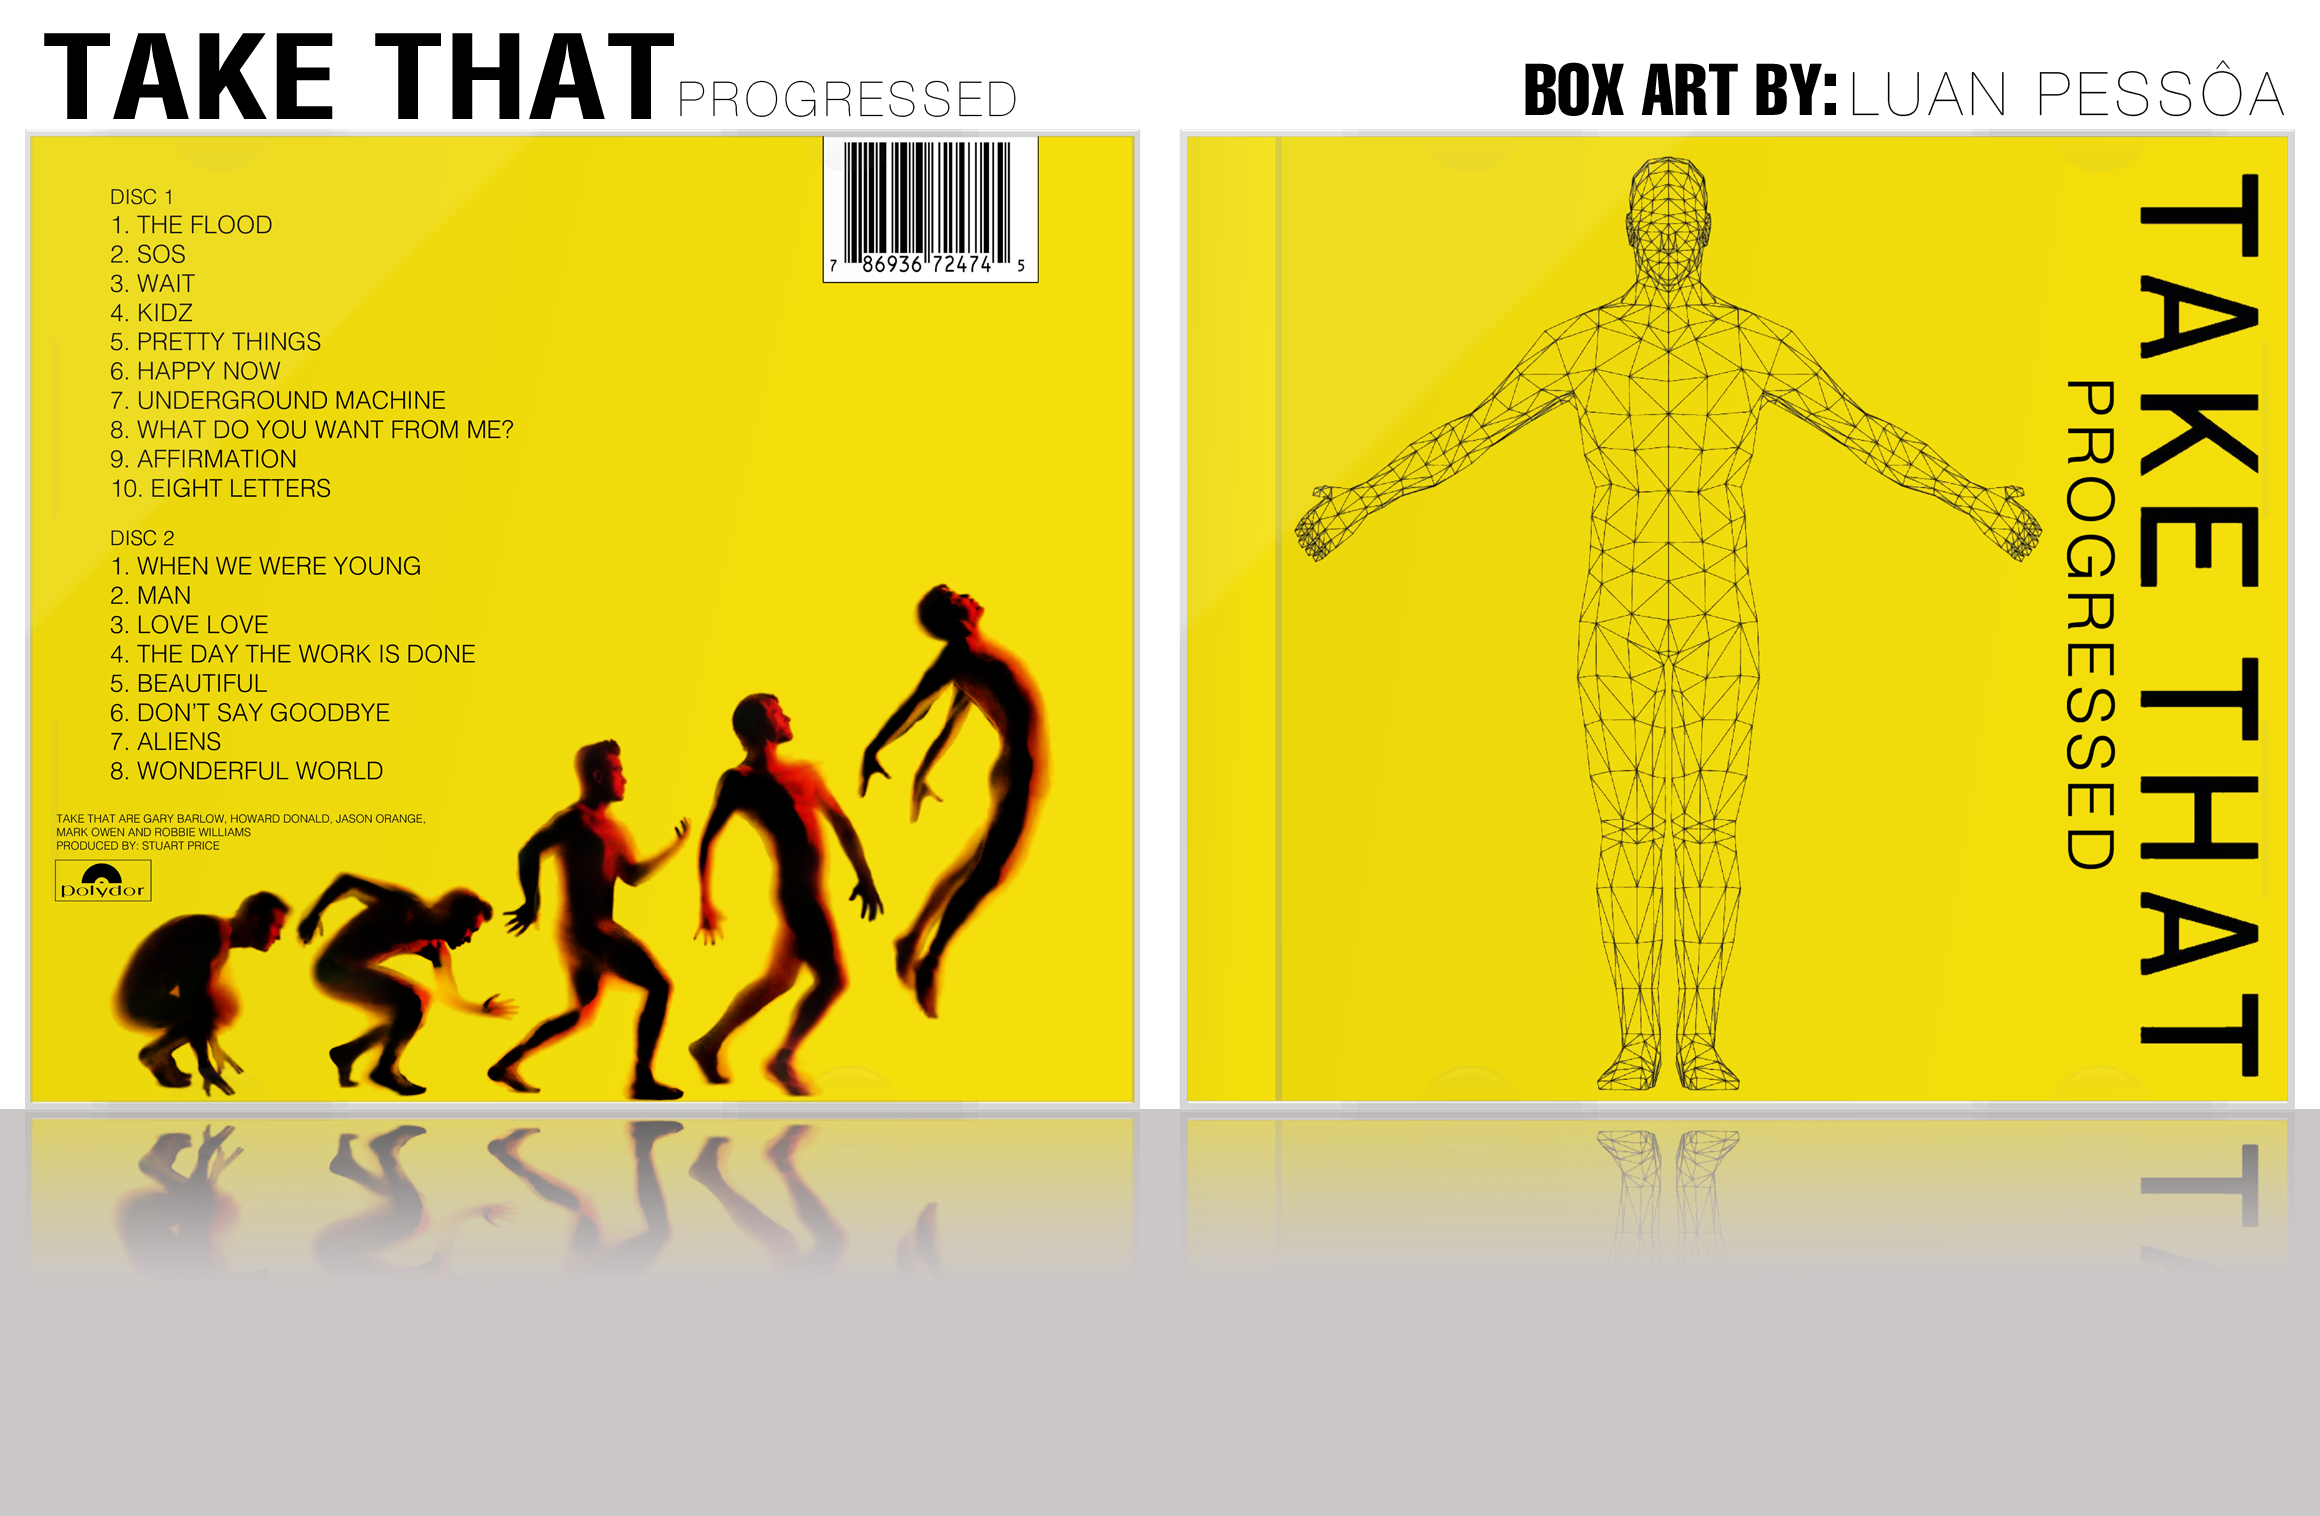 Take That - Progressed box cover